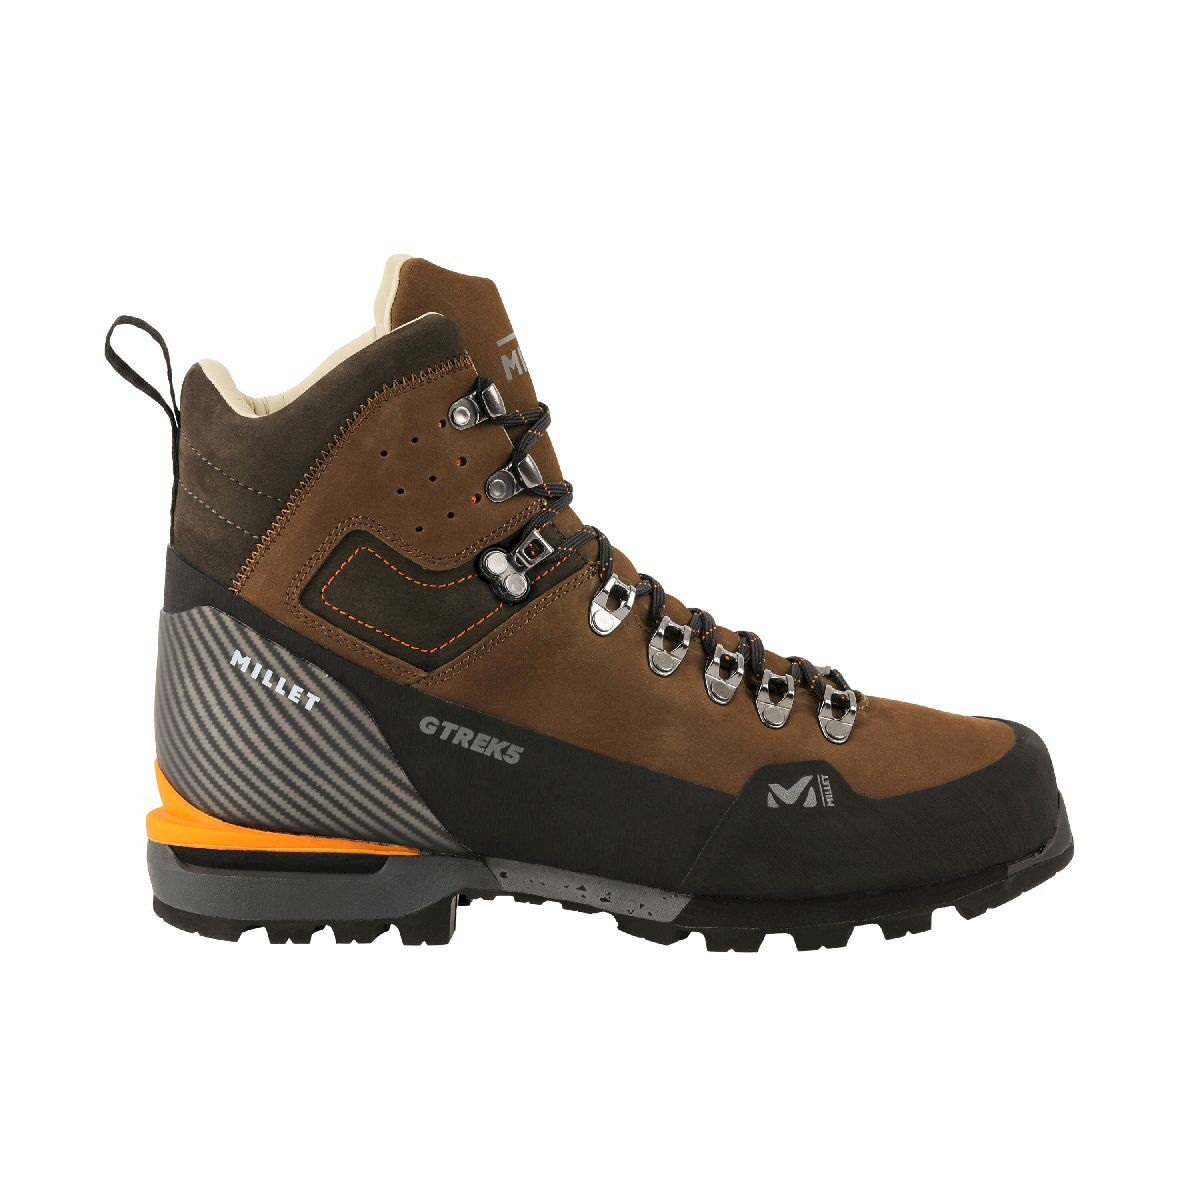 Millet G Trek 5 Leather - Hiking boots - Men's